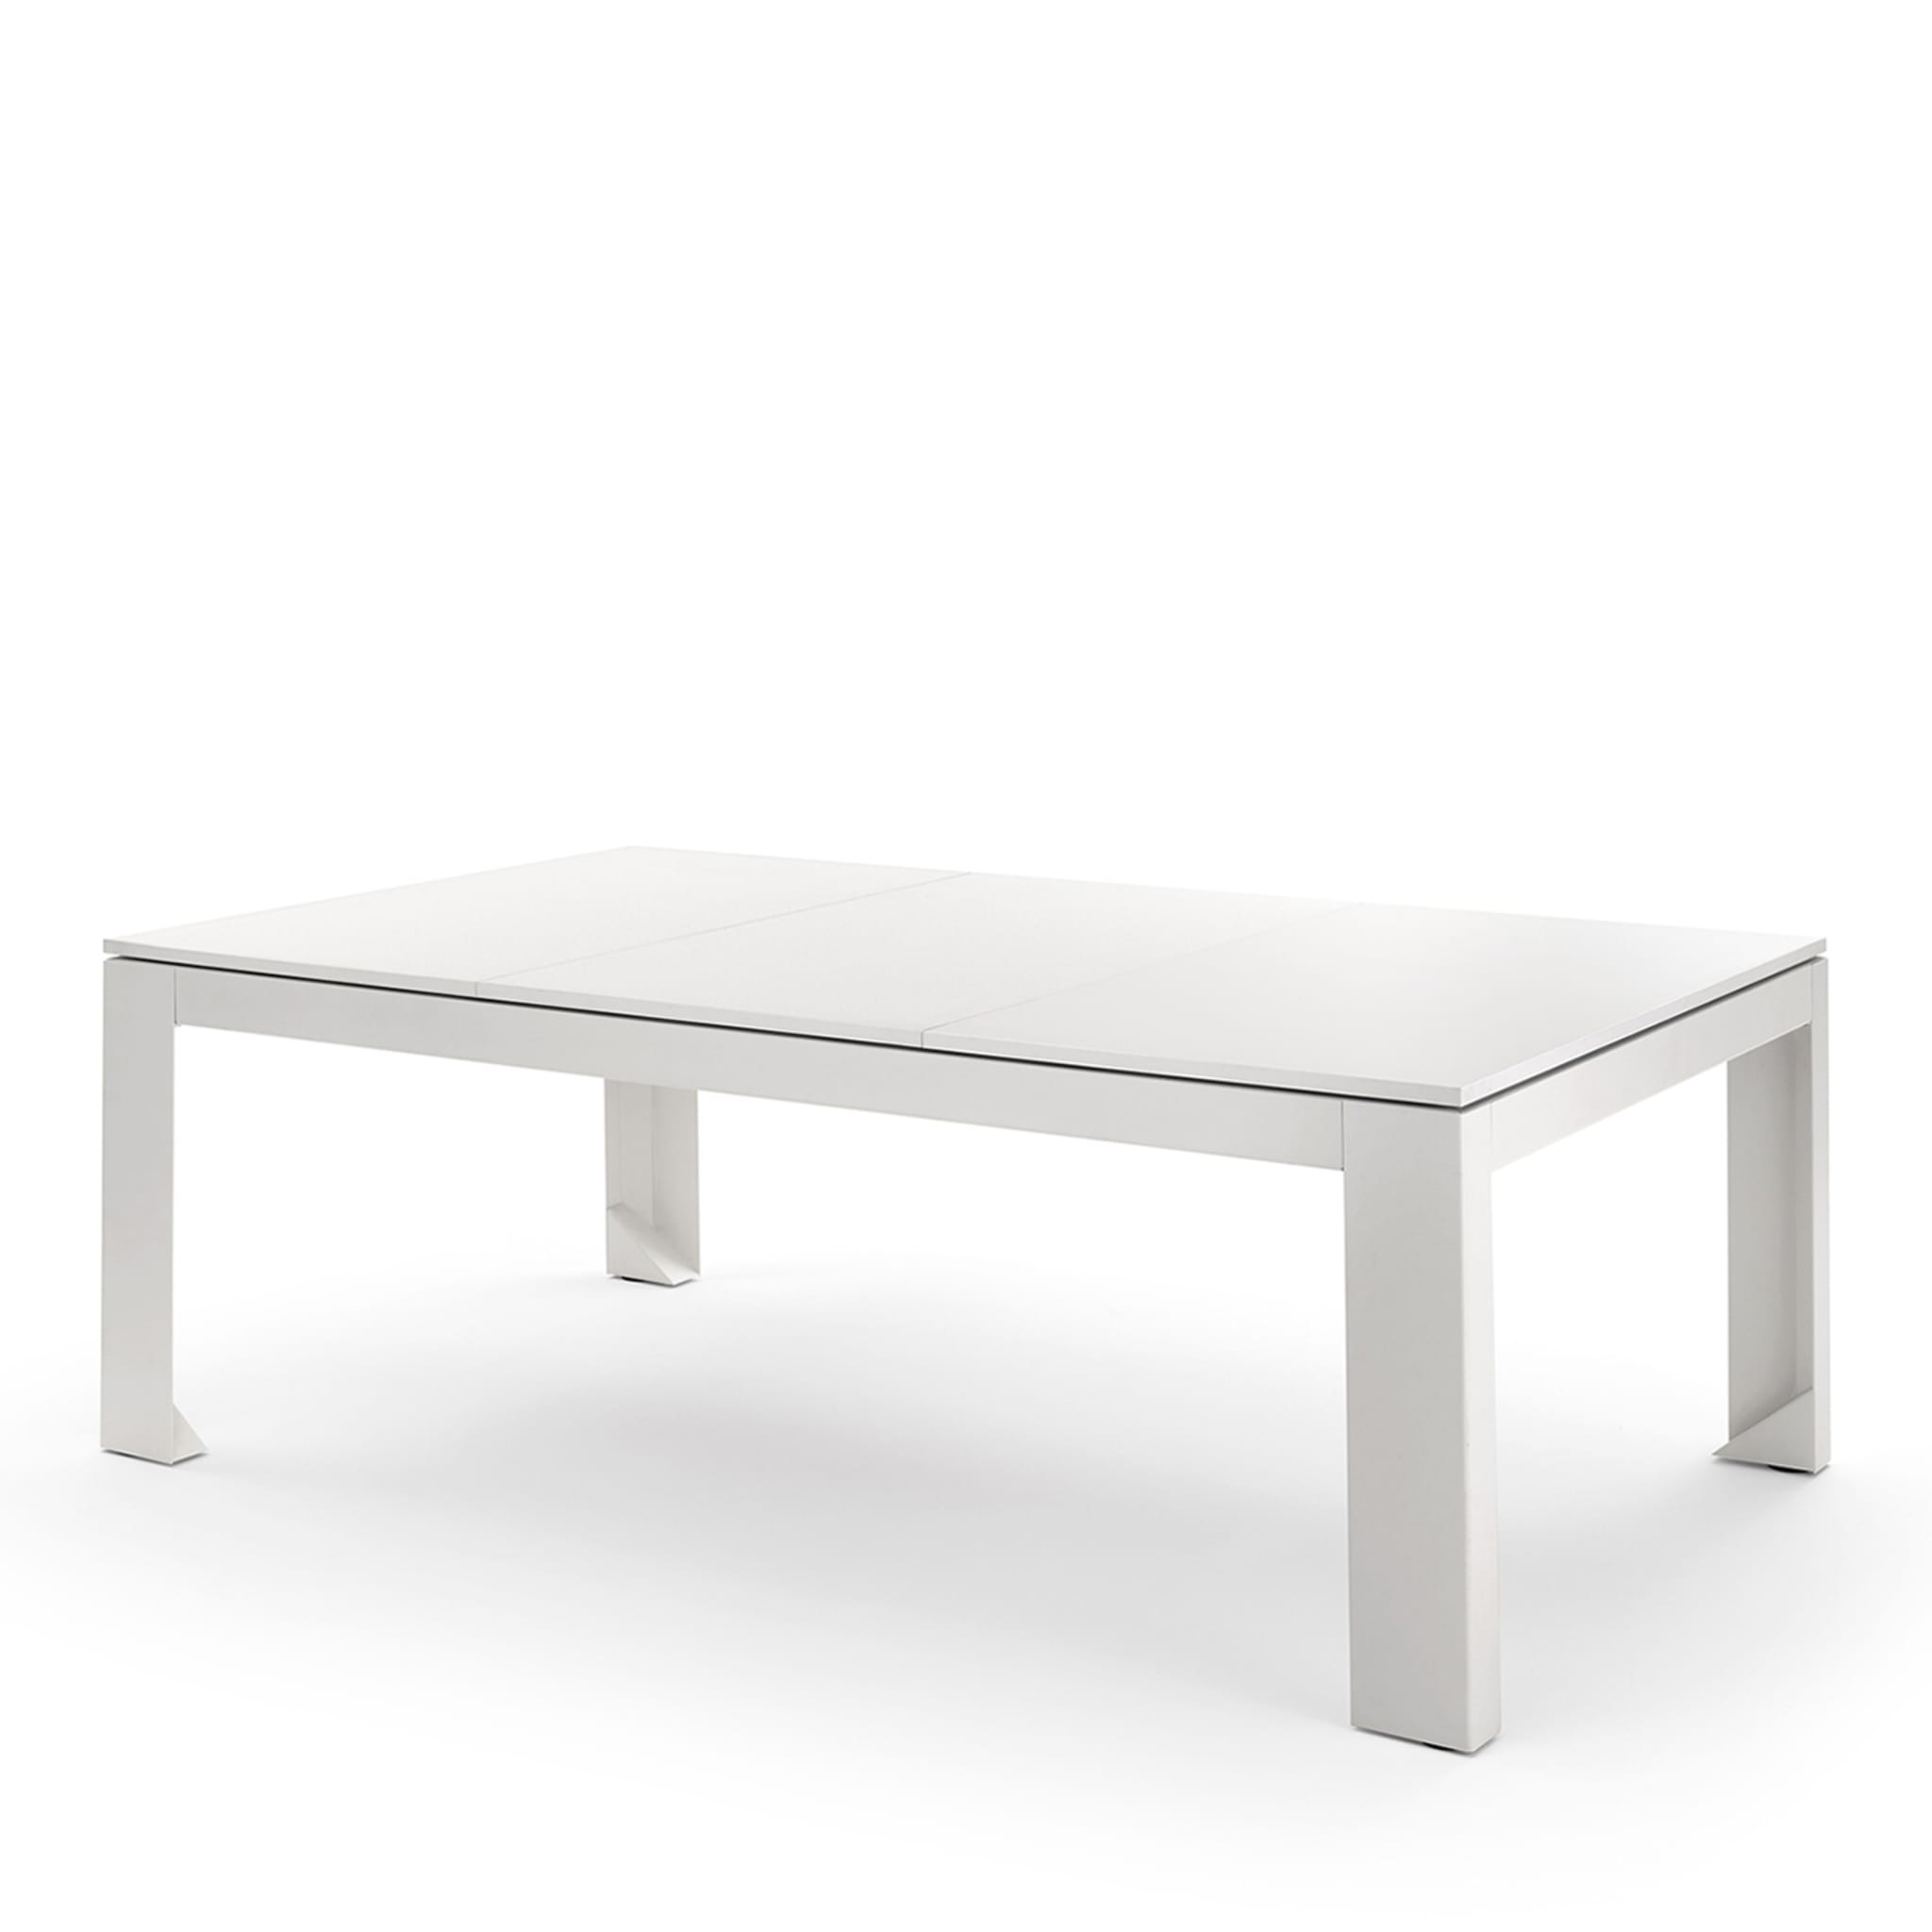 Carambola Cubista 7' White Pool Table by Basaglia + Rota Nodari - Alternative view 5